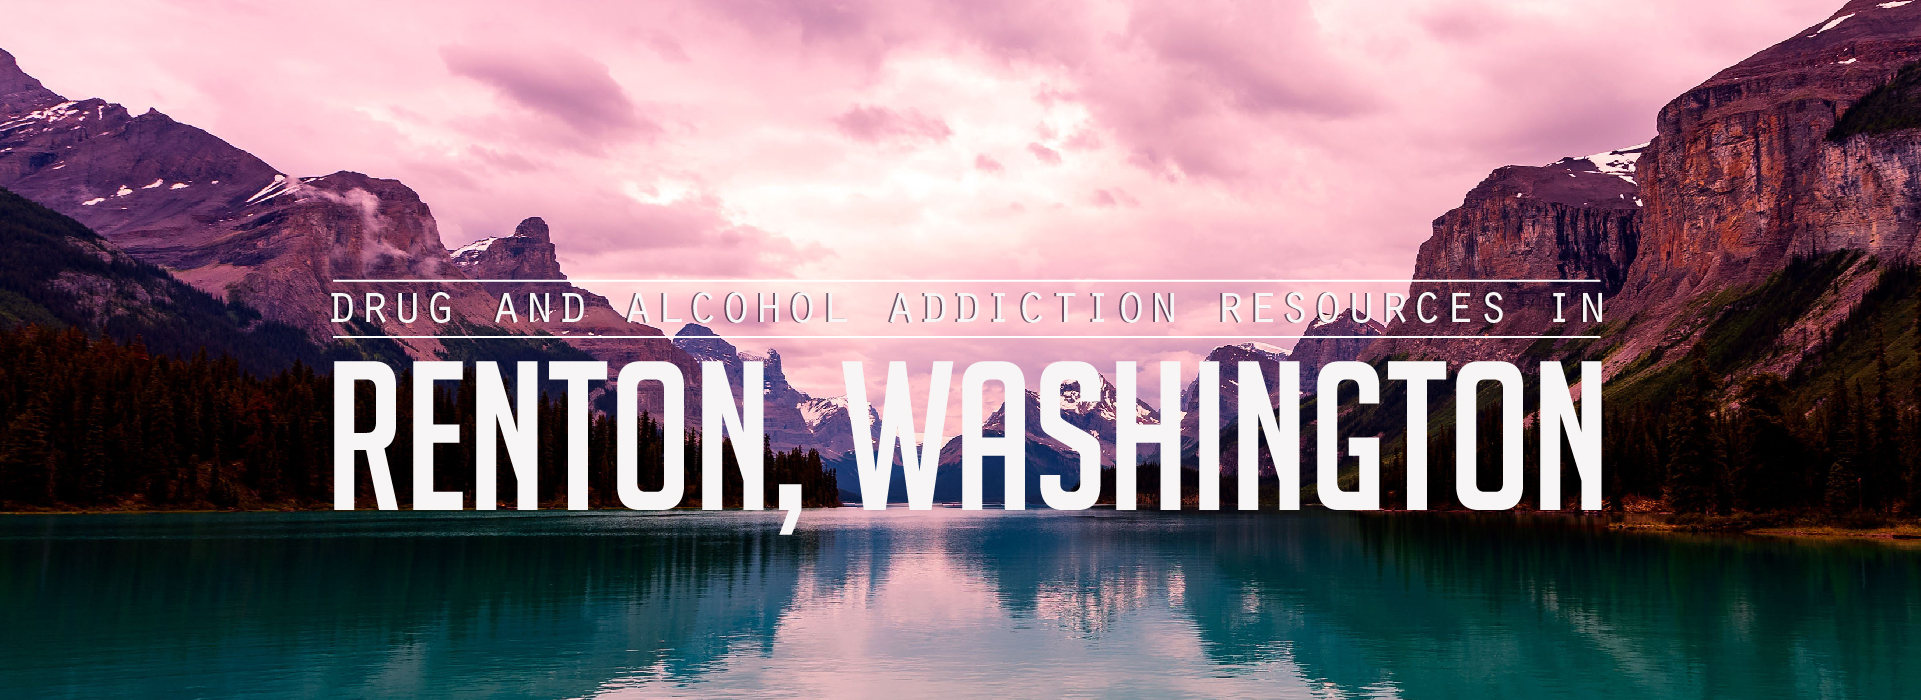 Renton, Washington Addiction Information